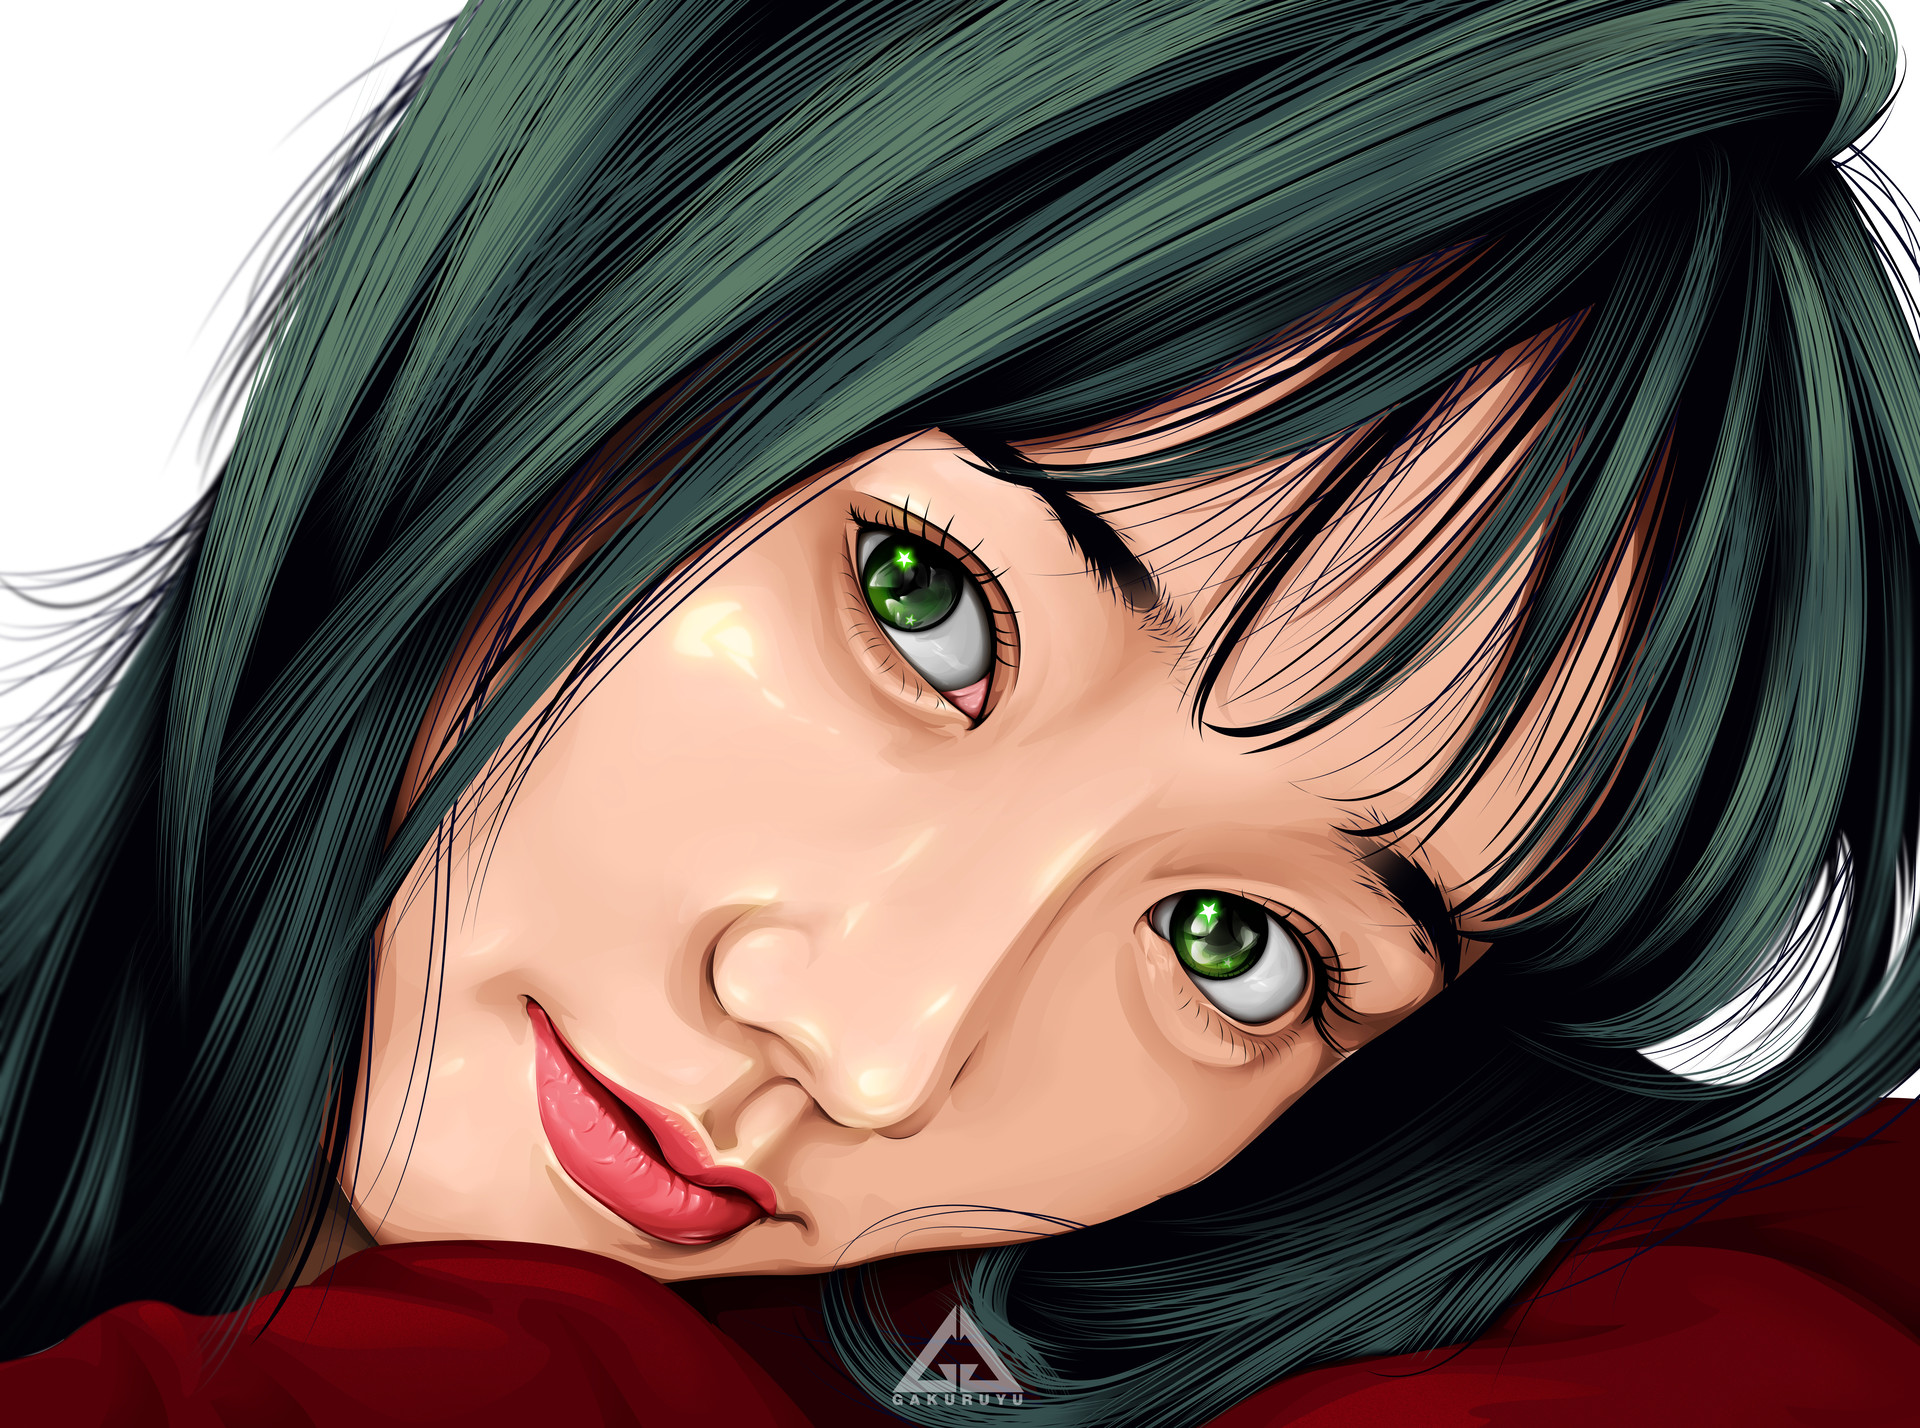 vexel art portrait vector illustration girl by gakuruyu artwork